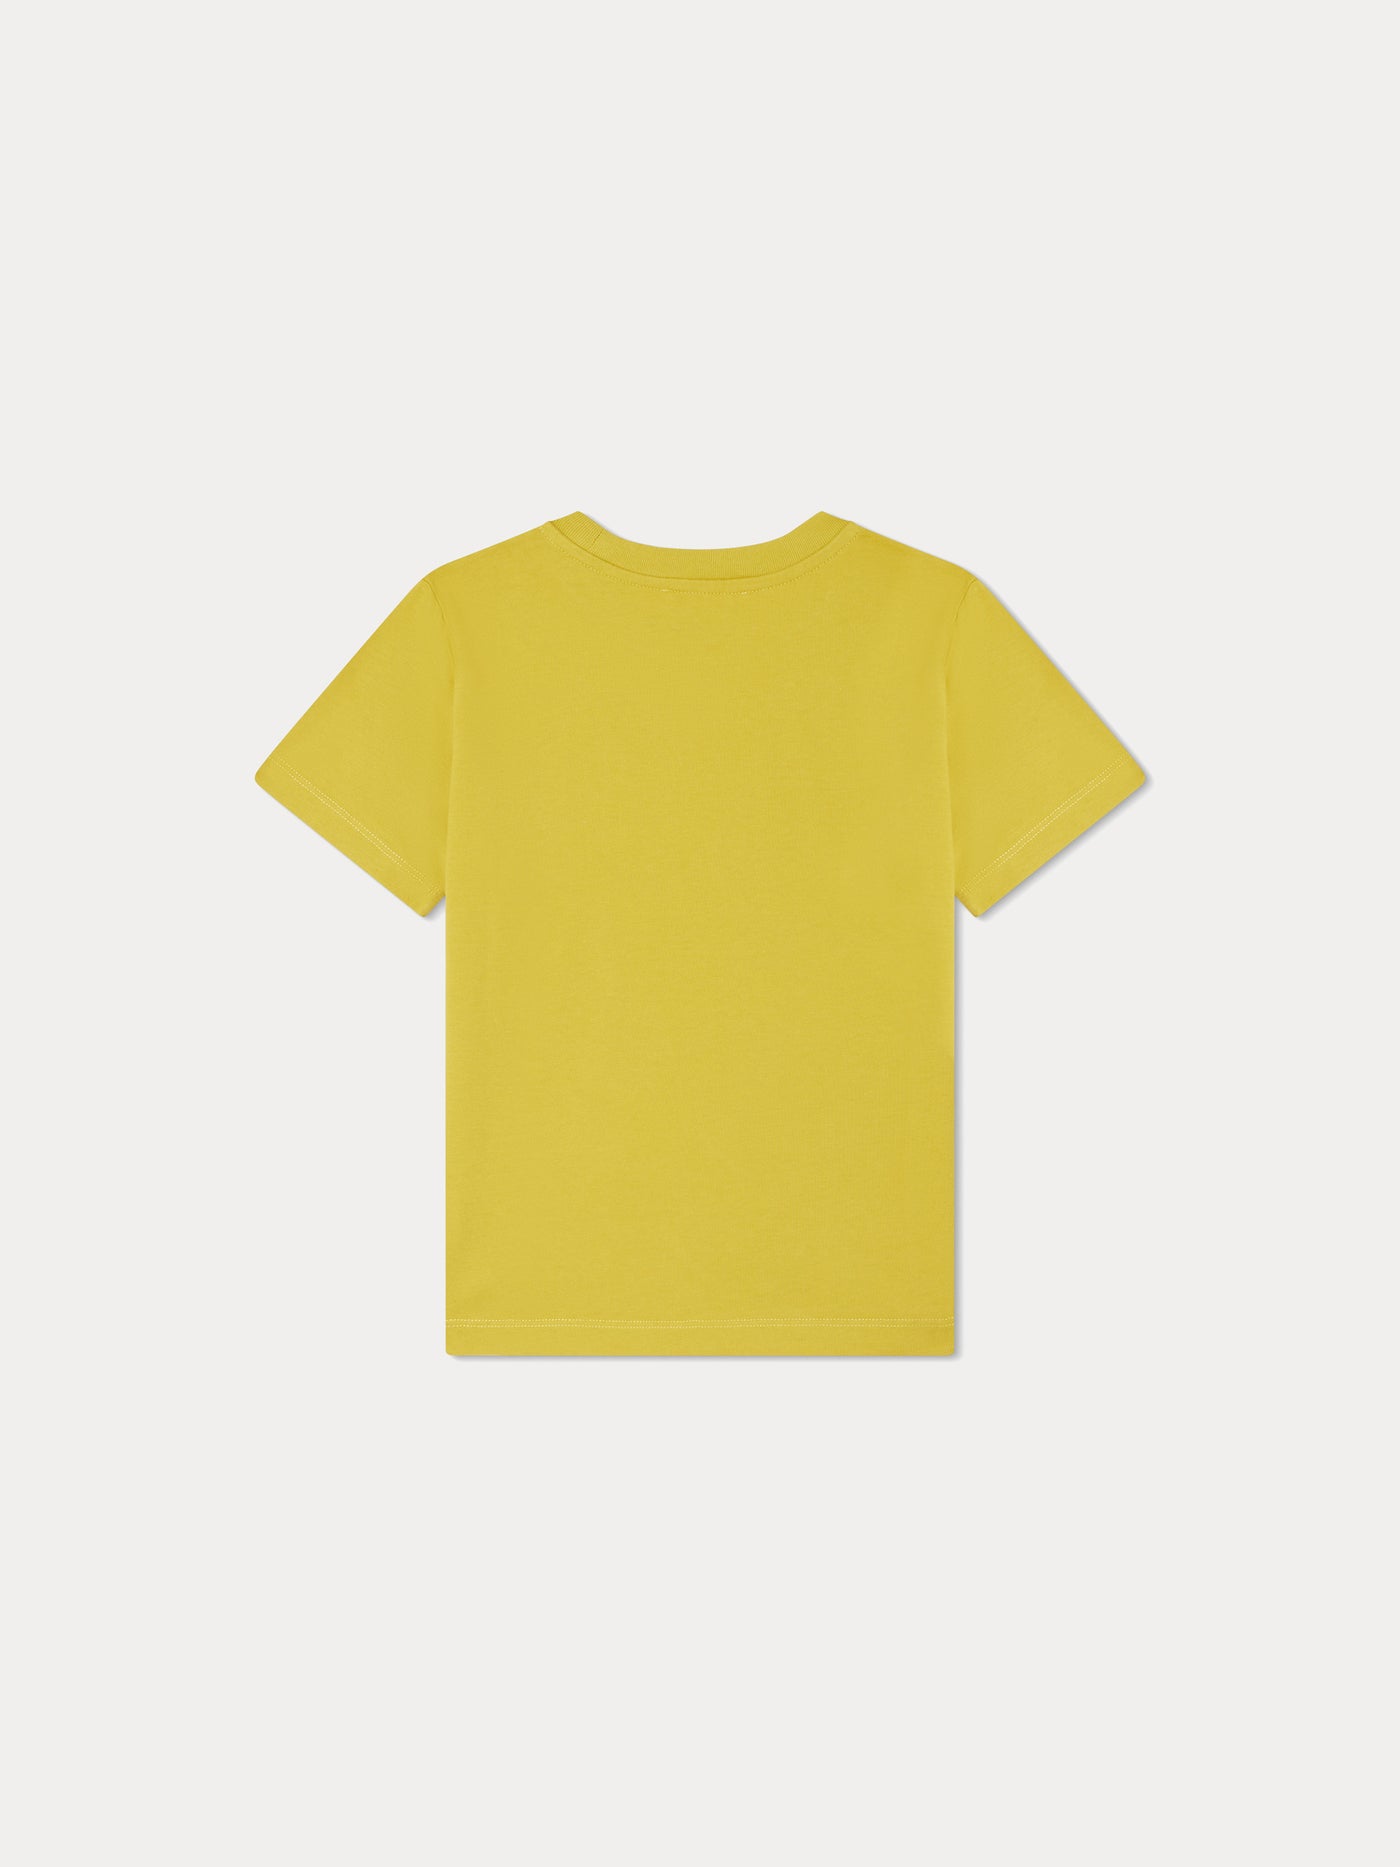 T-shirt Thibald jaune acide